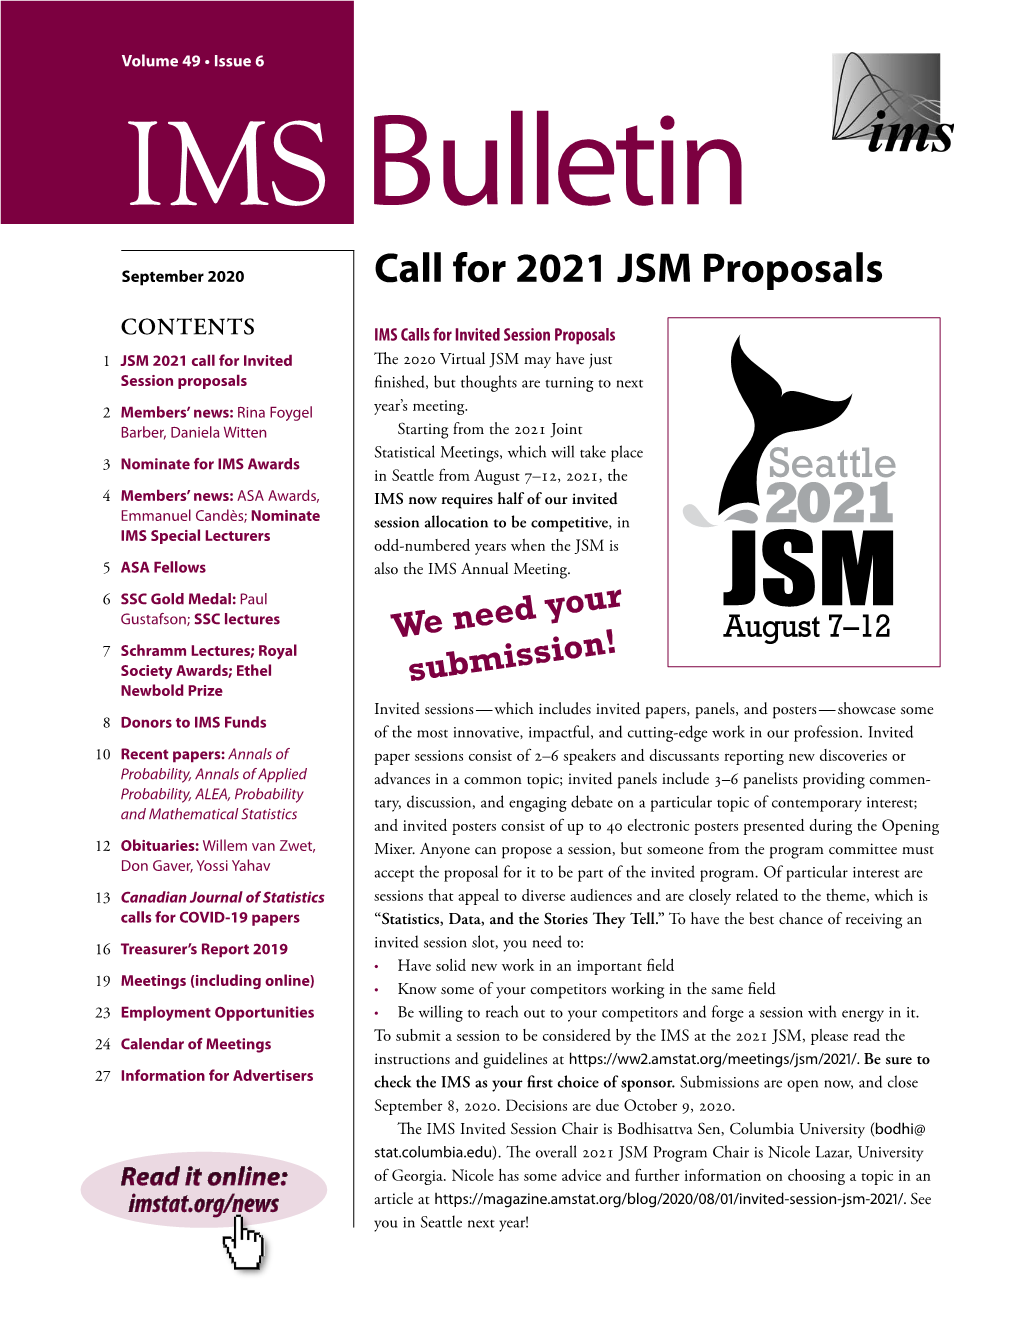 Call for 2021 JSM Proposals